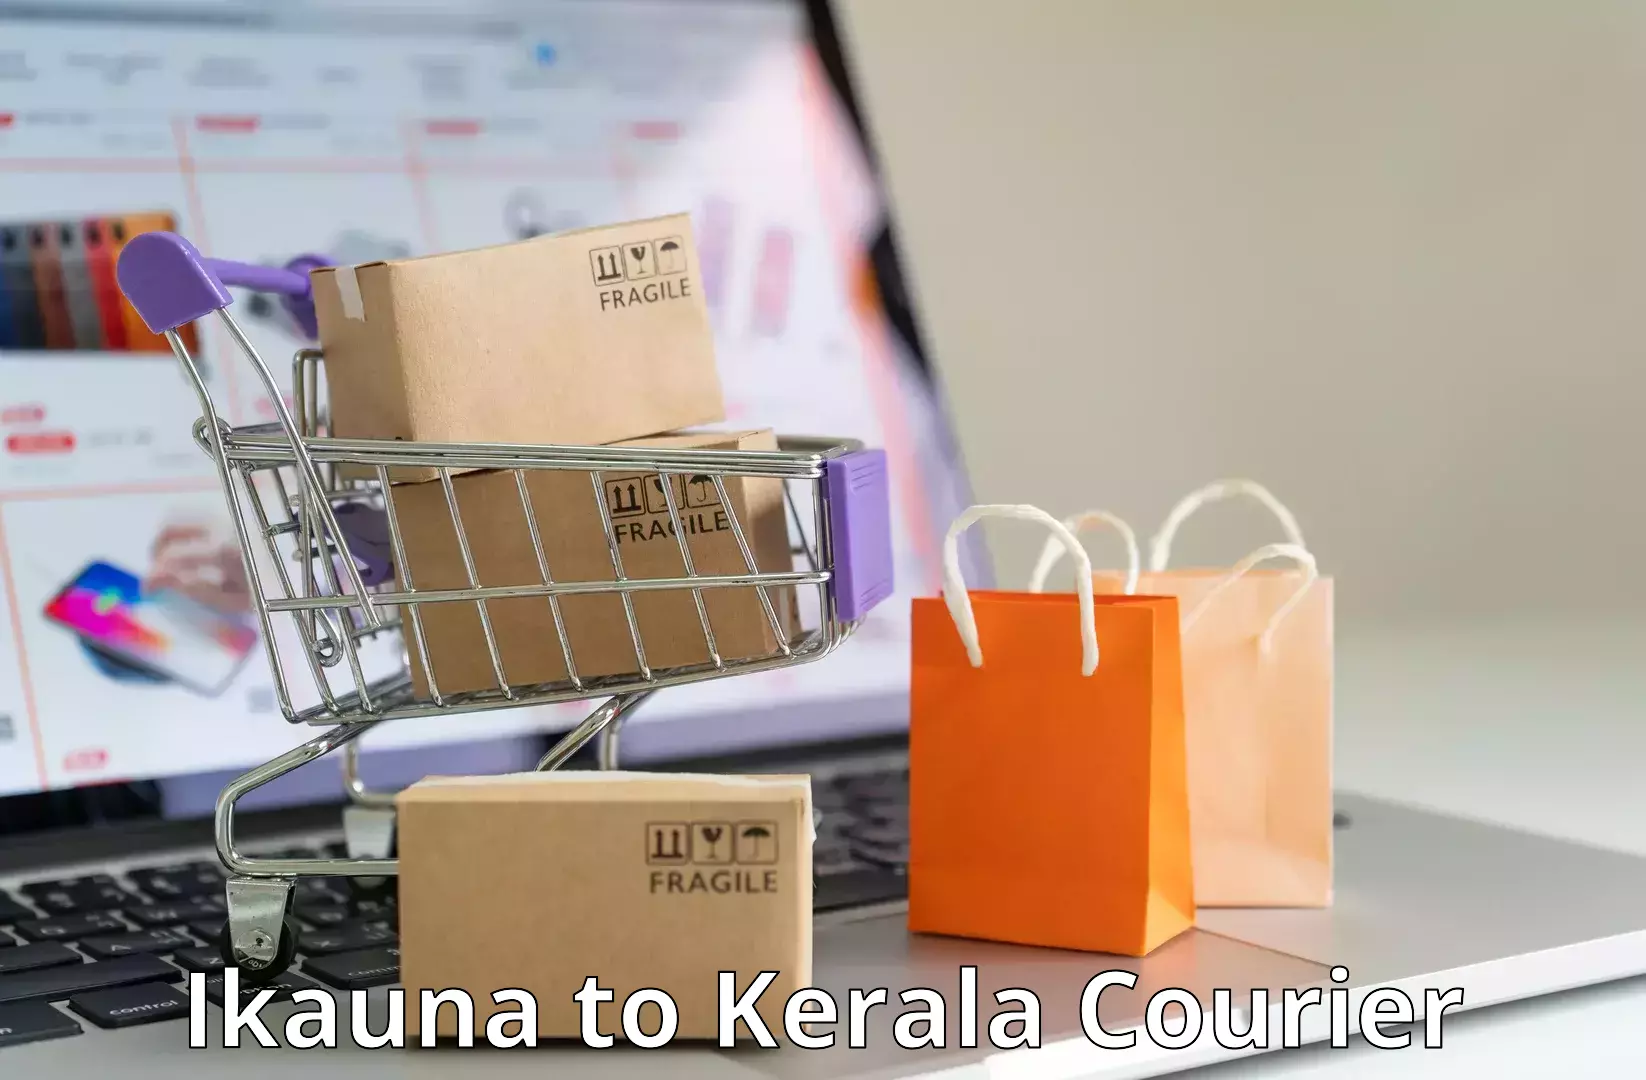 Efficient courier operations Ikauna to Cochin Port Kochi